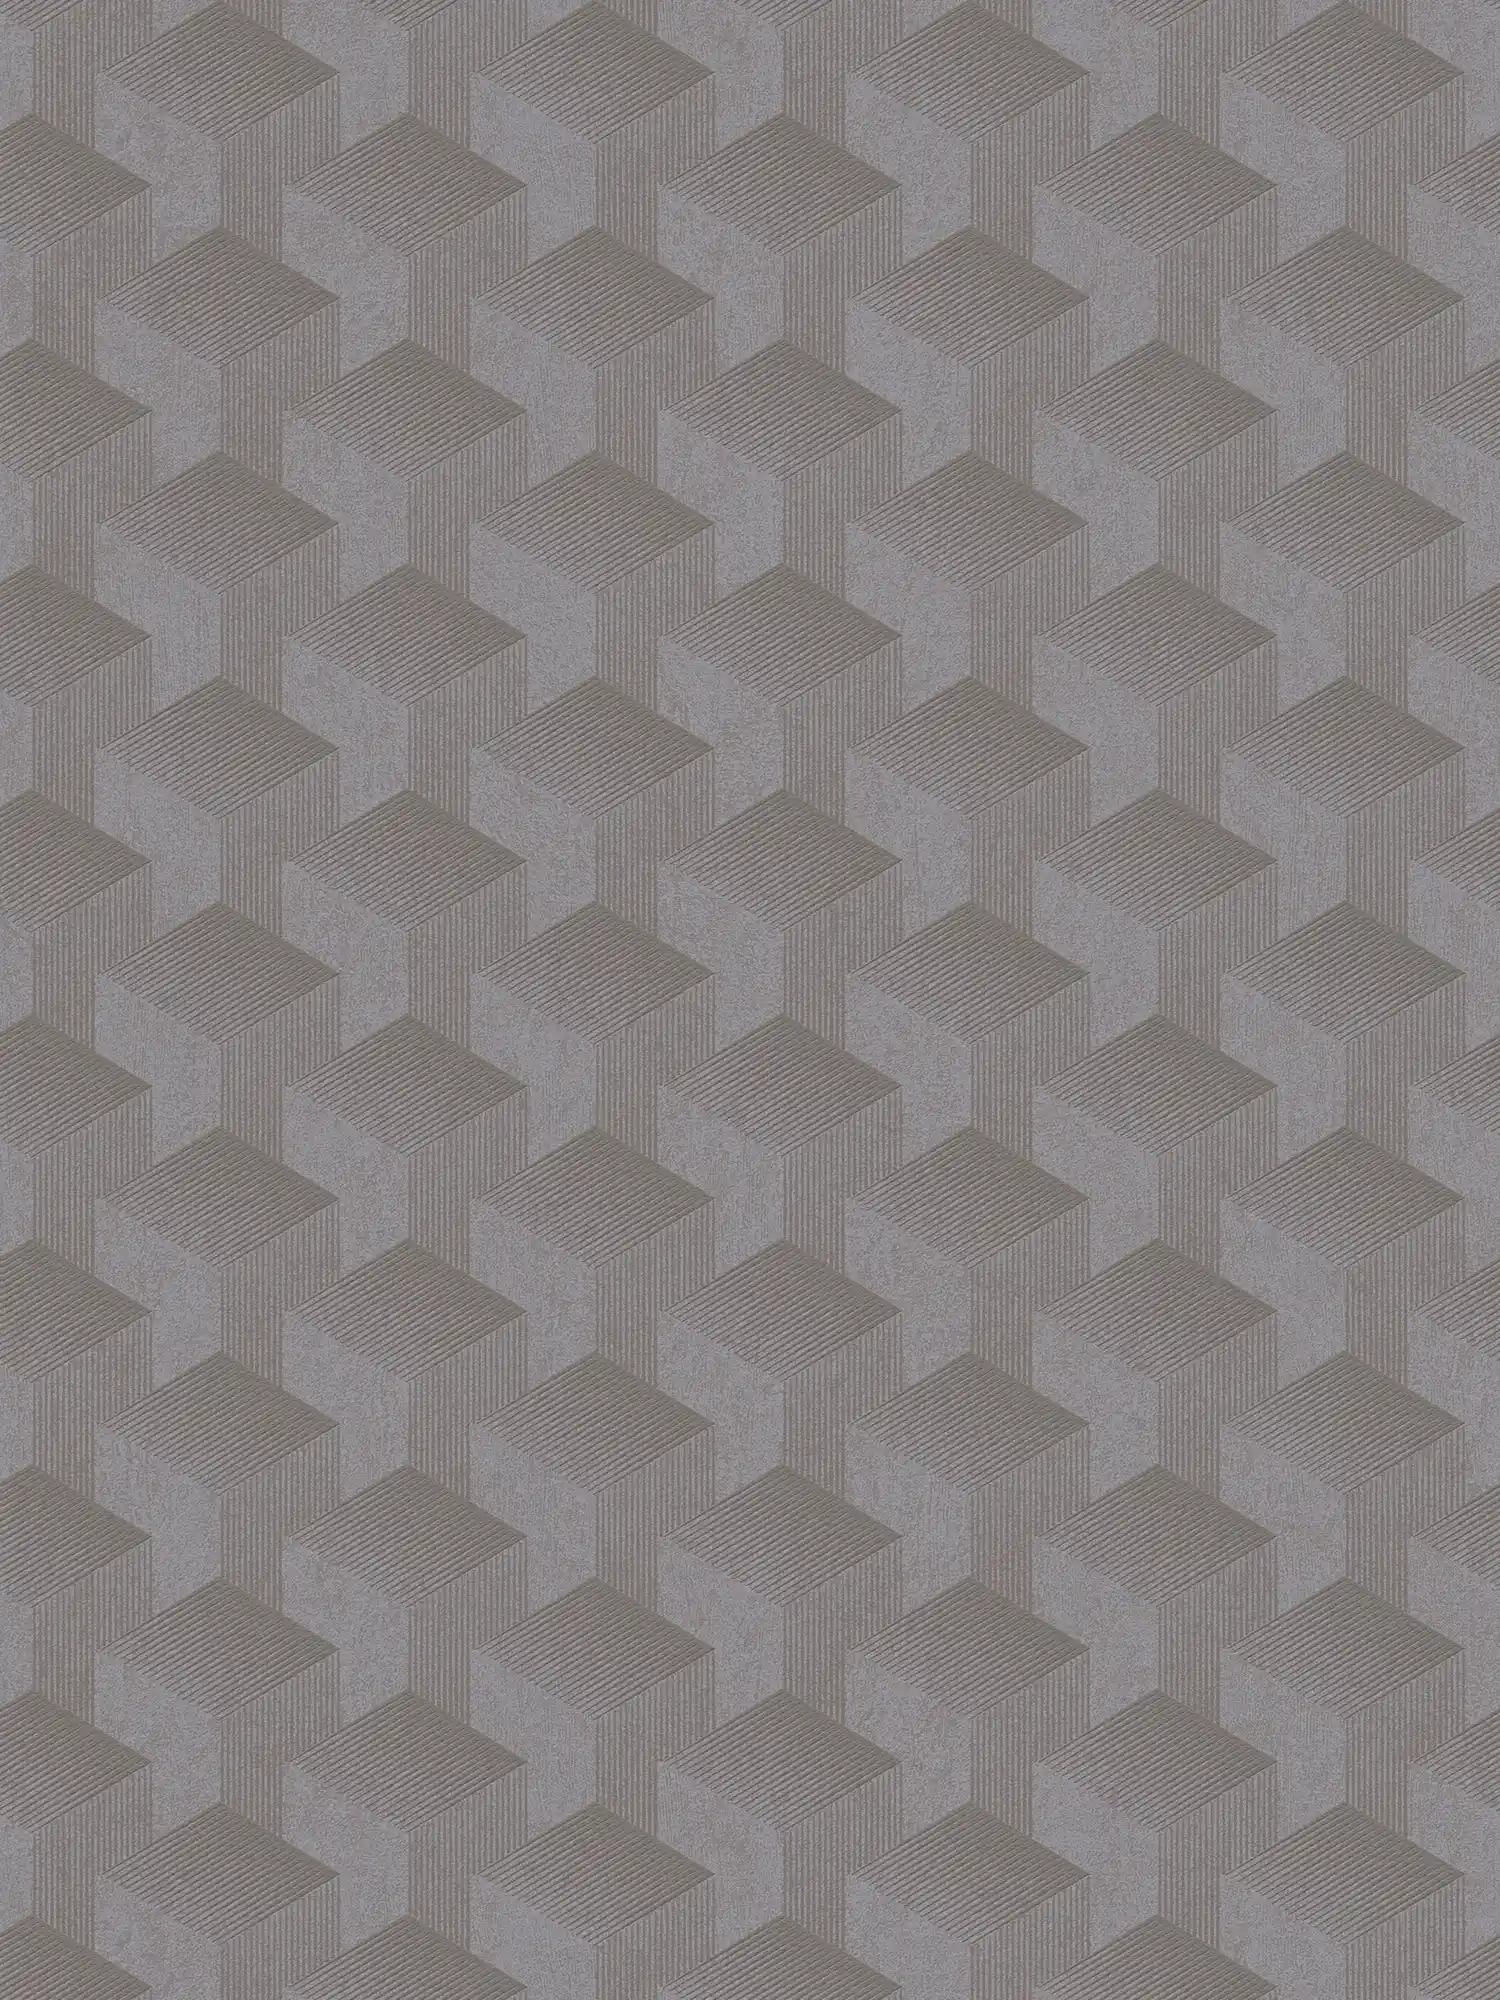 Geometrisch behang met 3D grafisch patroon mat - grijs
